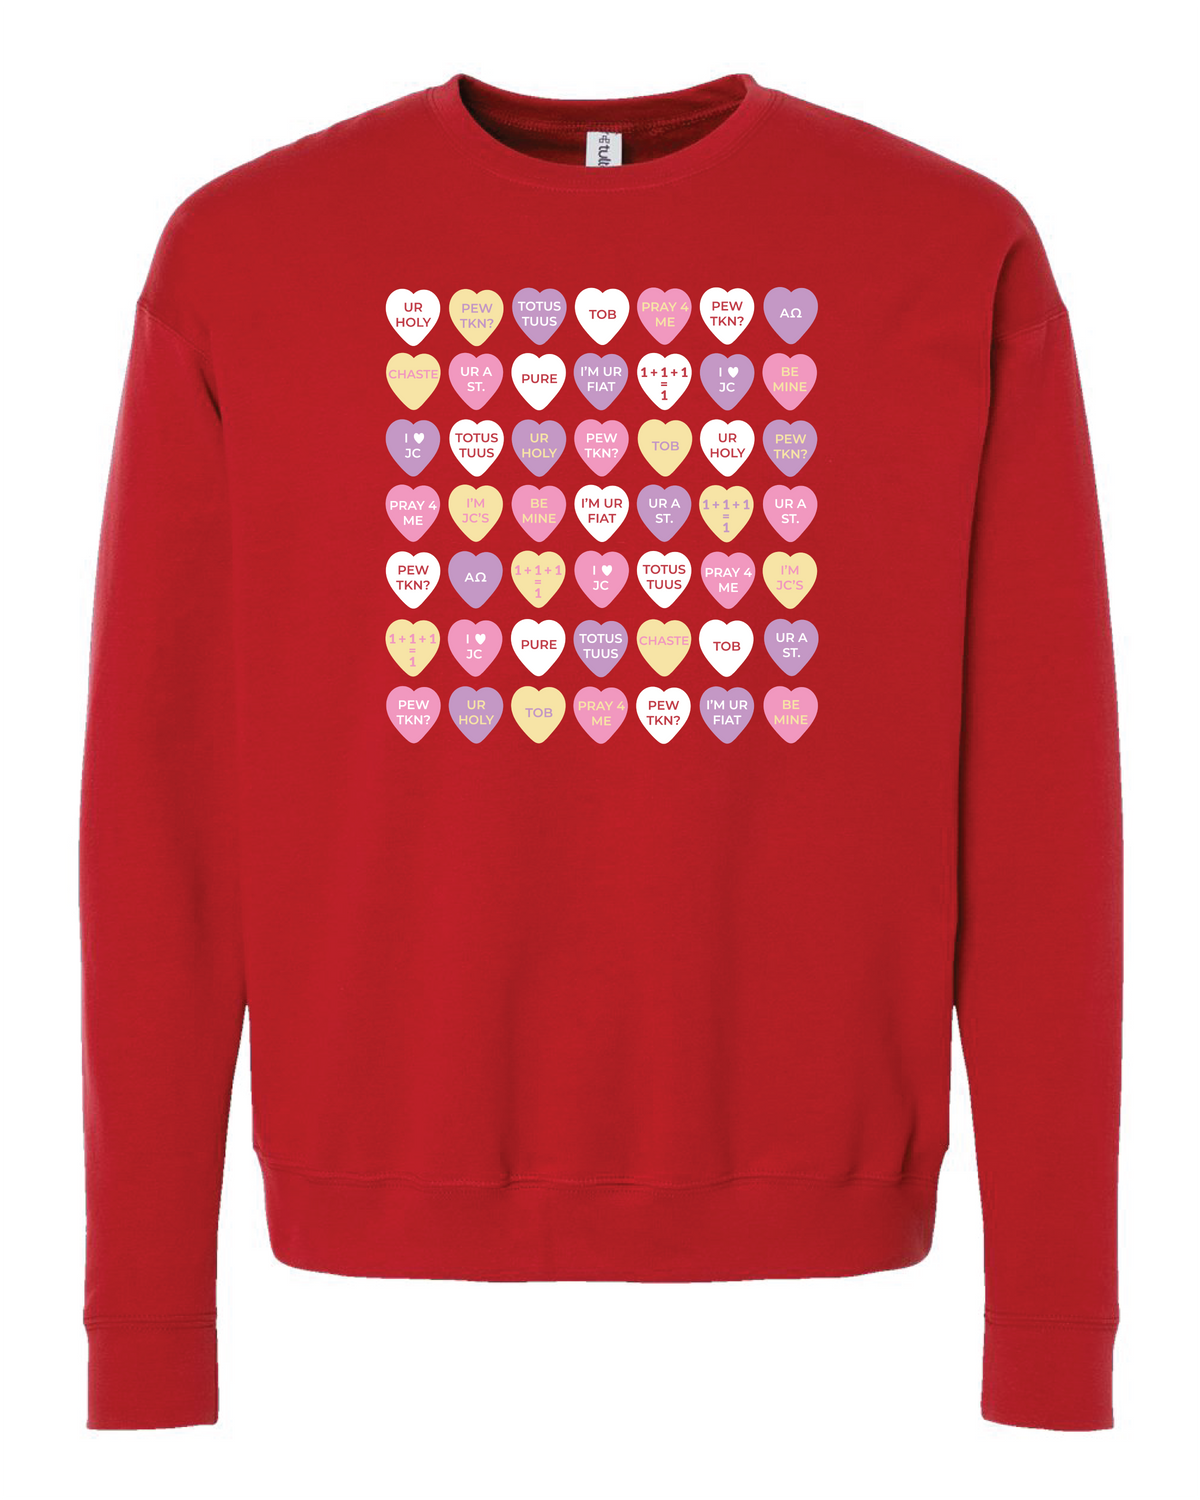 Candy Hearts Sweatshirt (Crewneck)